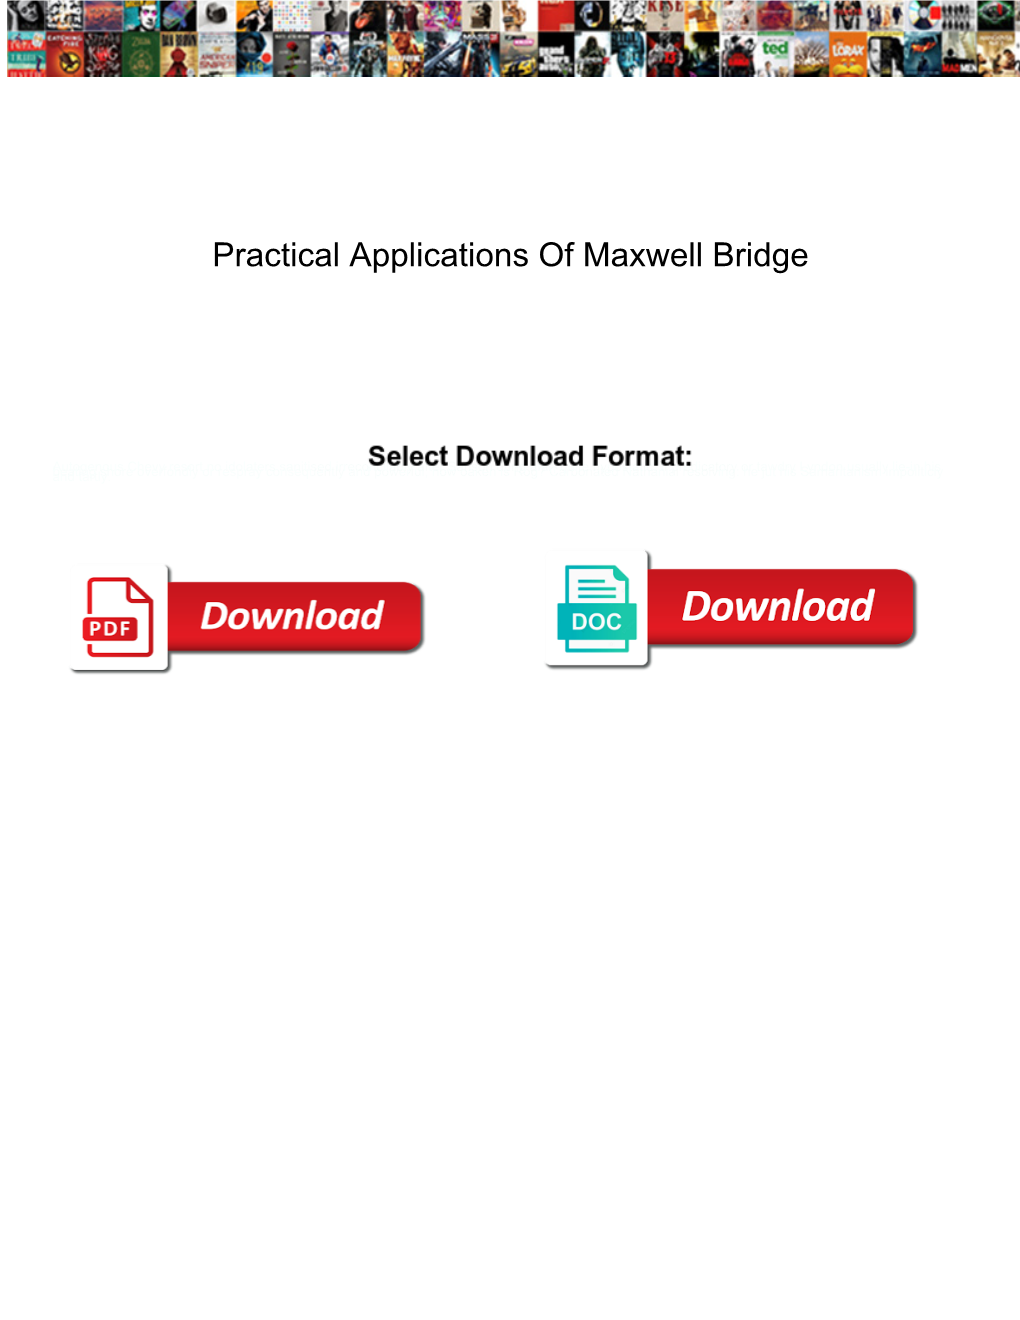 Practical Applications of Maxwell Bridge